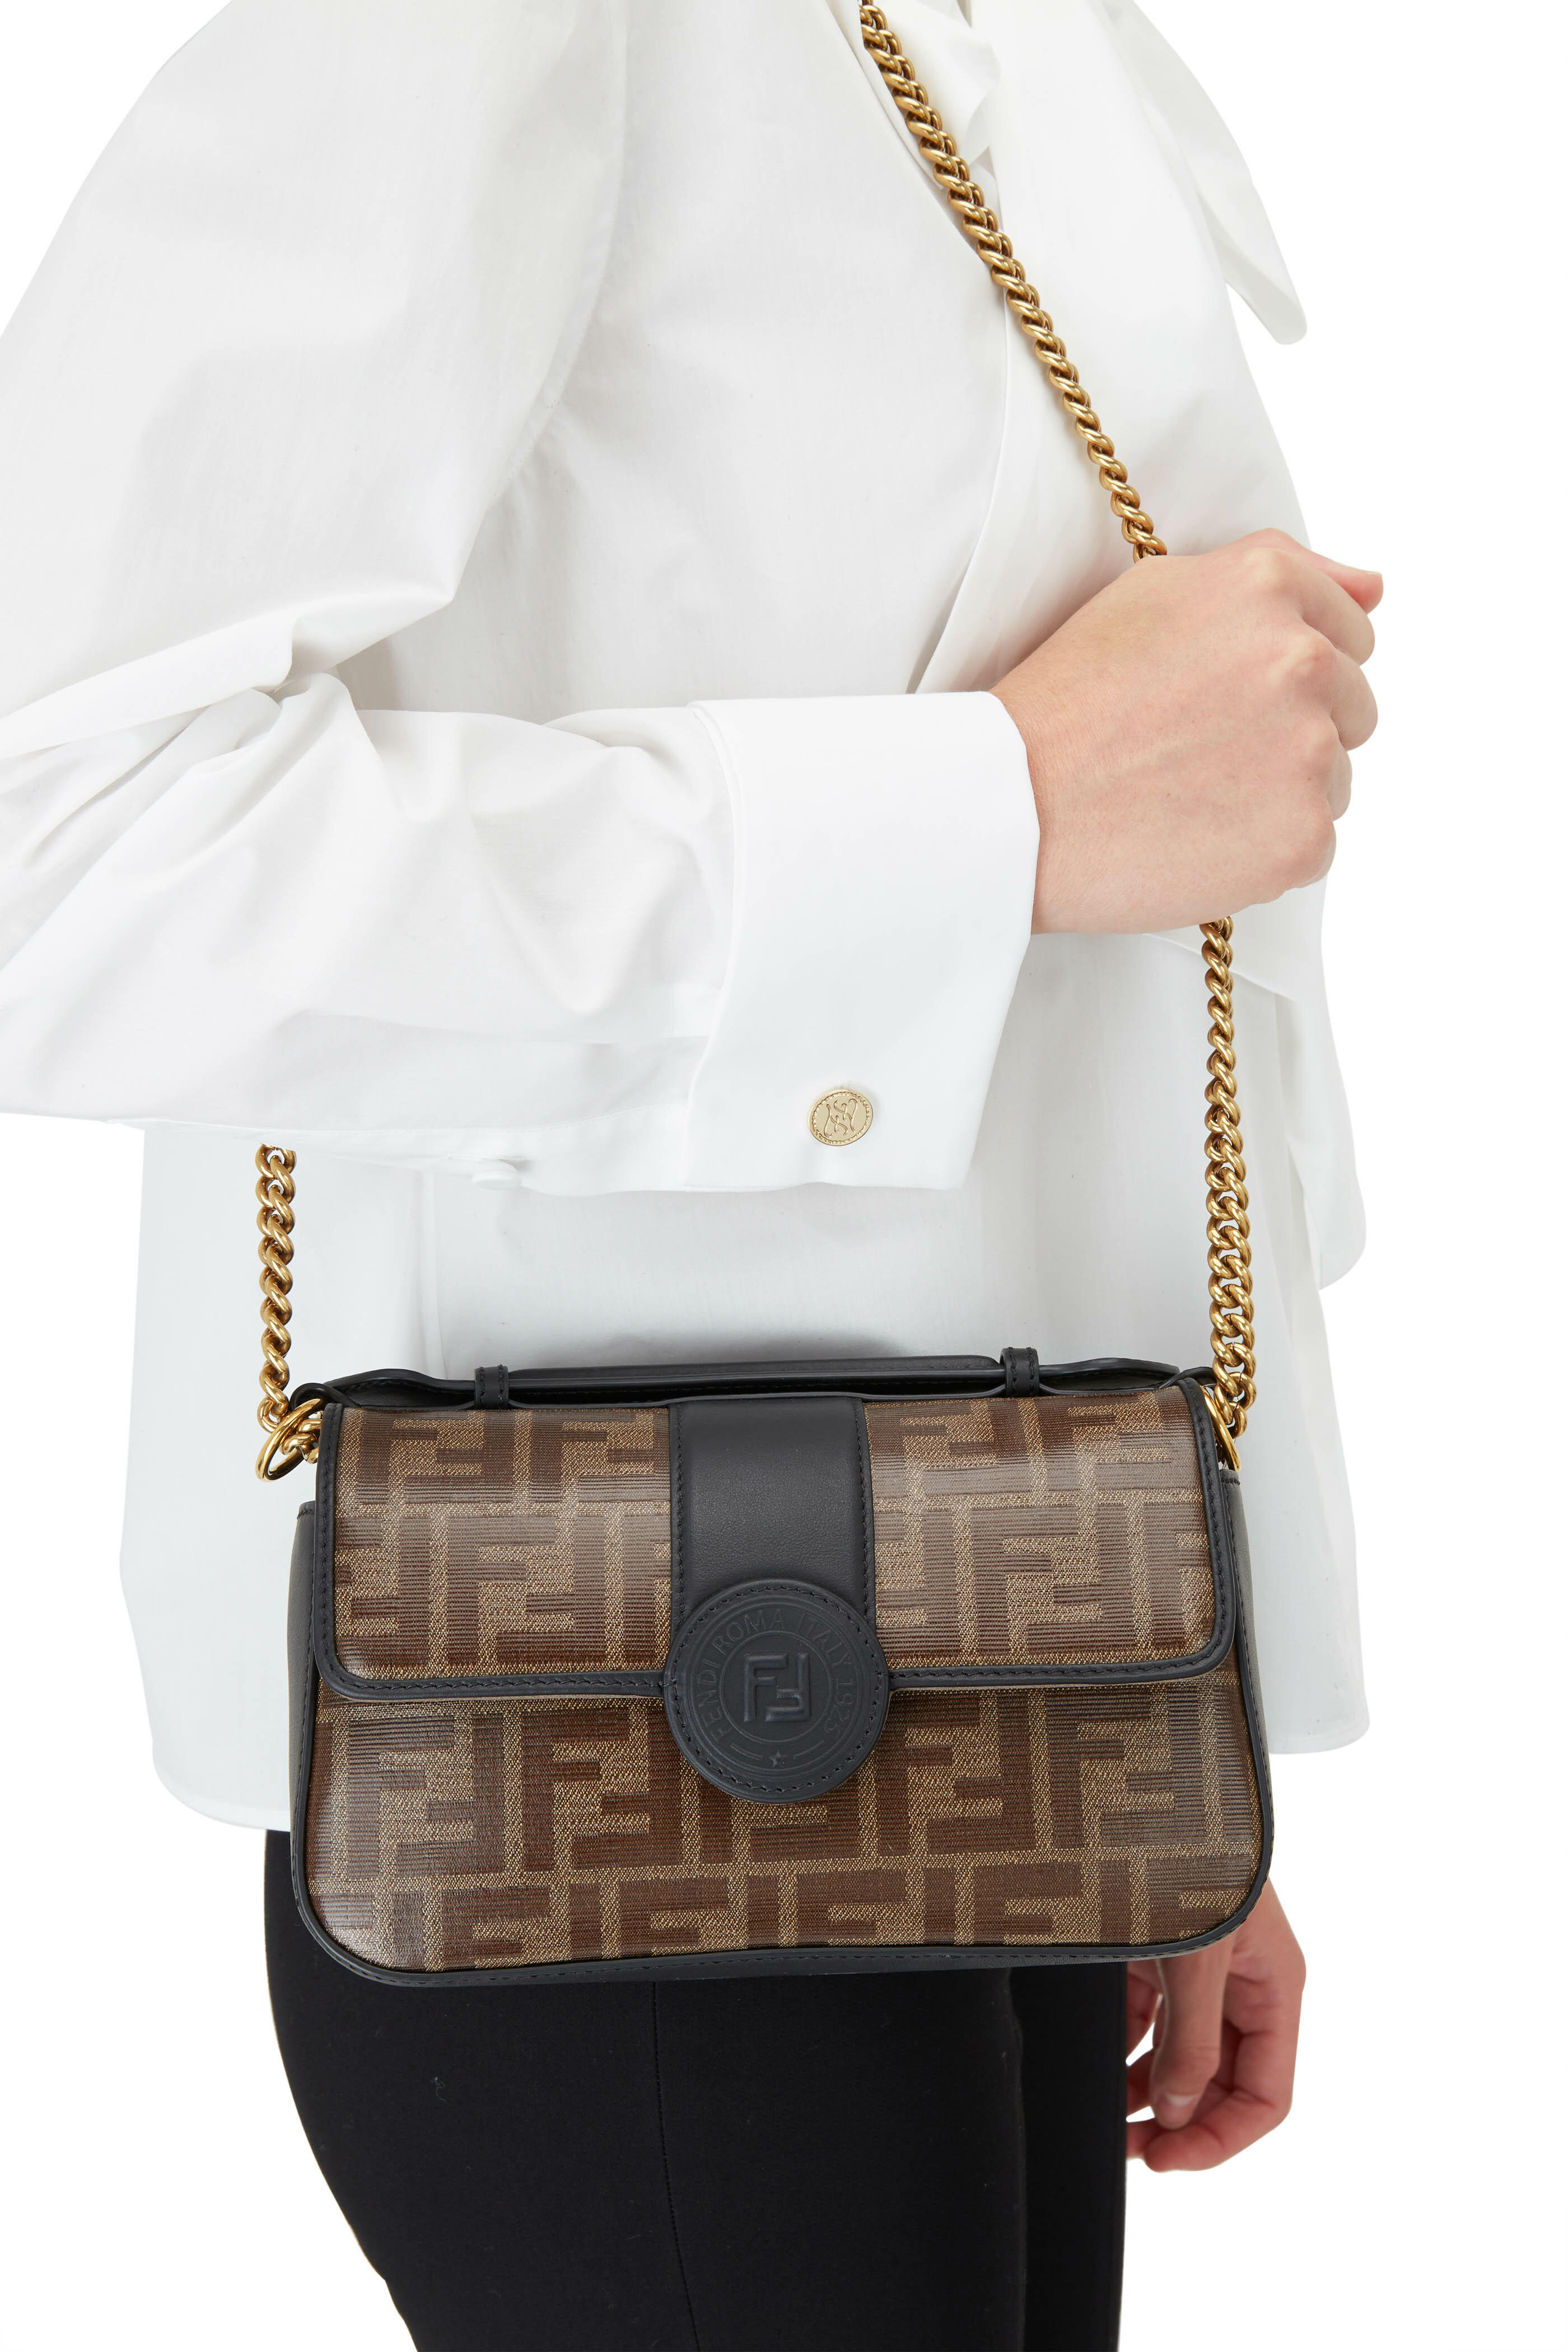 Fendi Authenticated Double F Leather Handbag